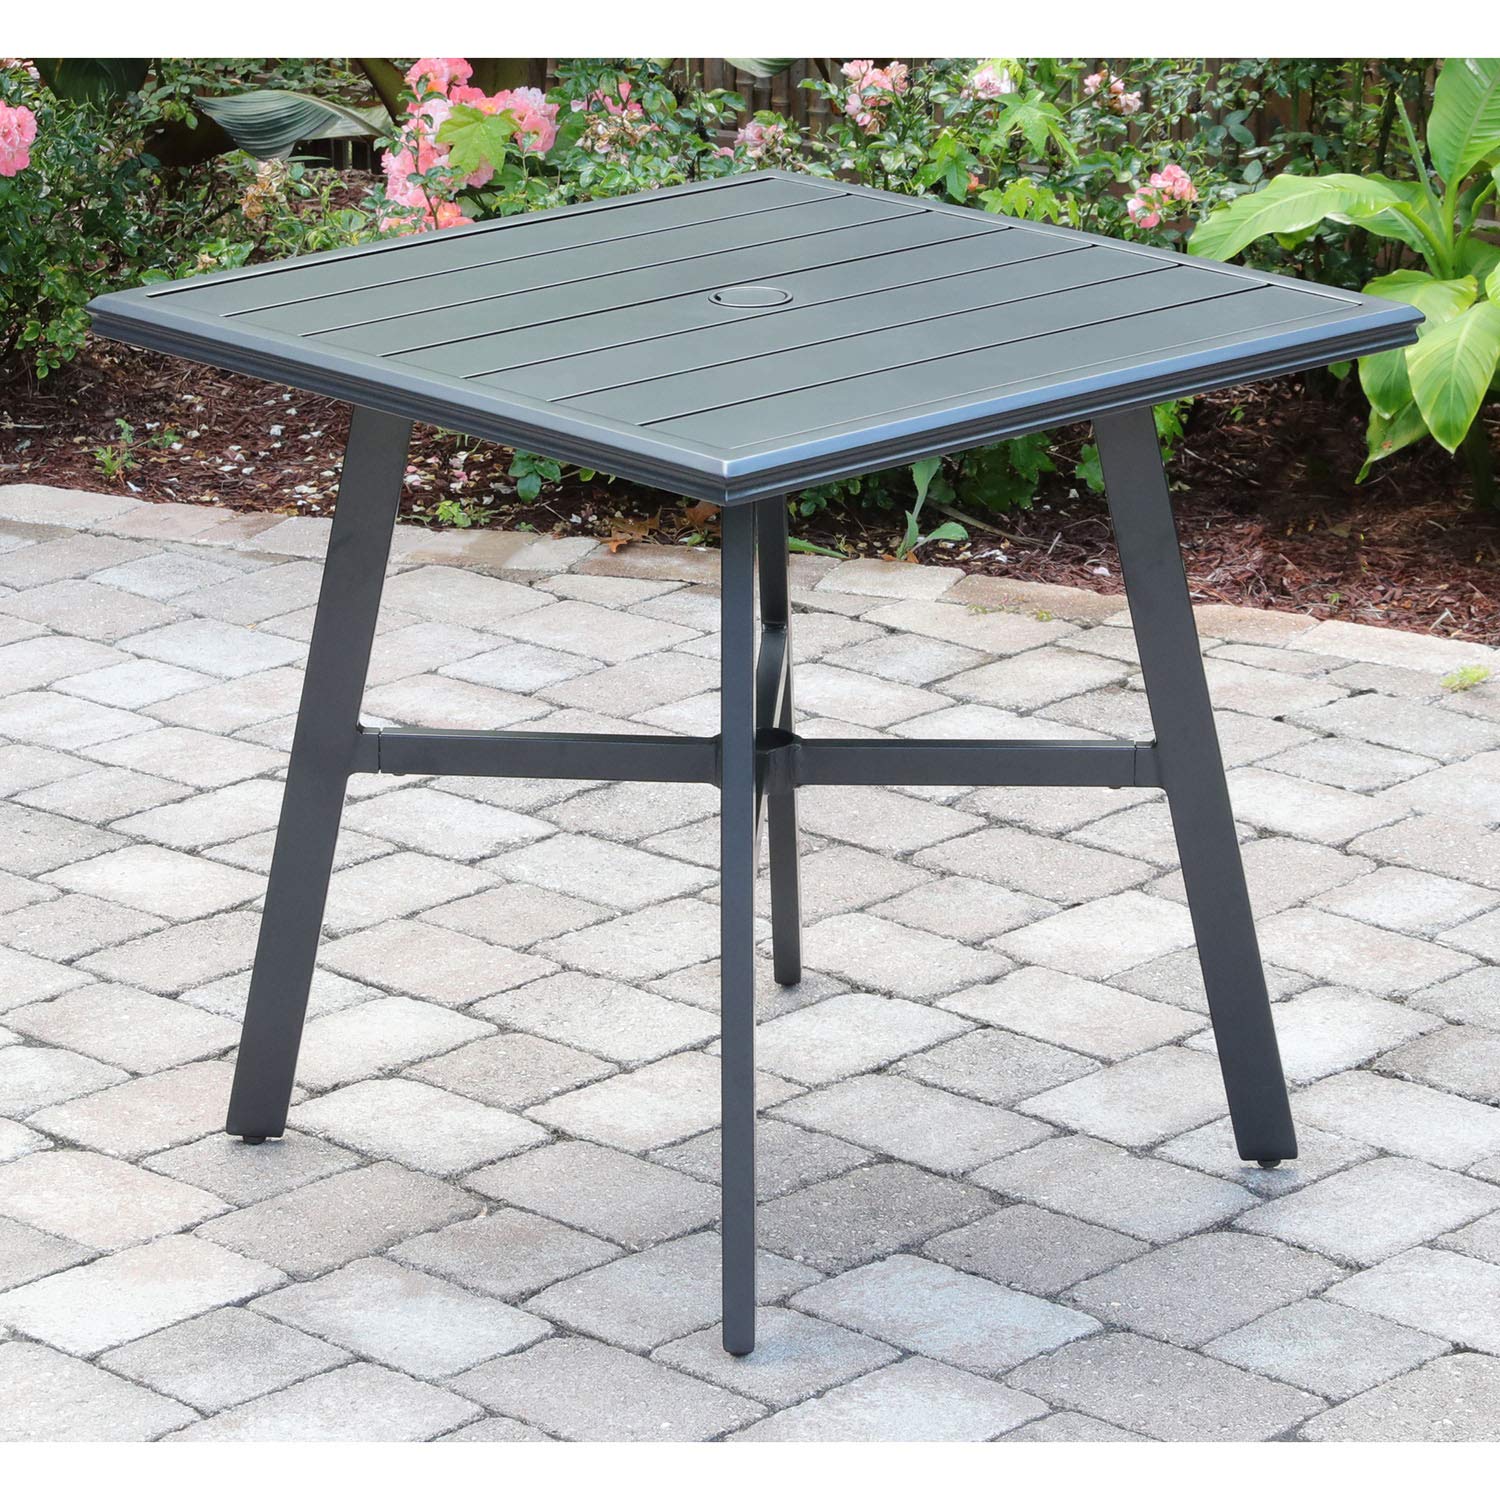 Hanover Cortino 3-Piece Grade Bistro Set Commercial Outdoor Furniture, Gunmetal